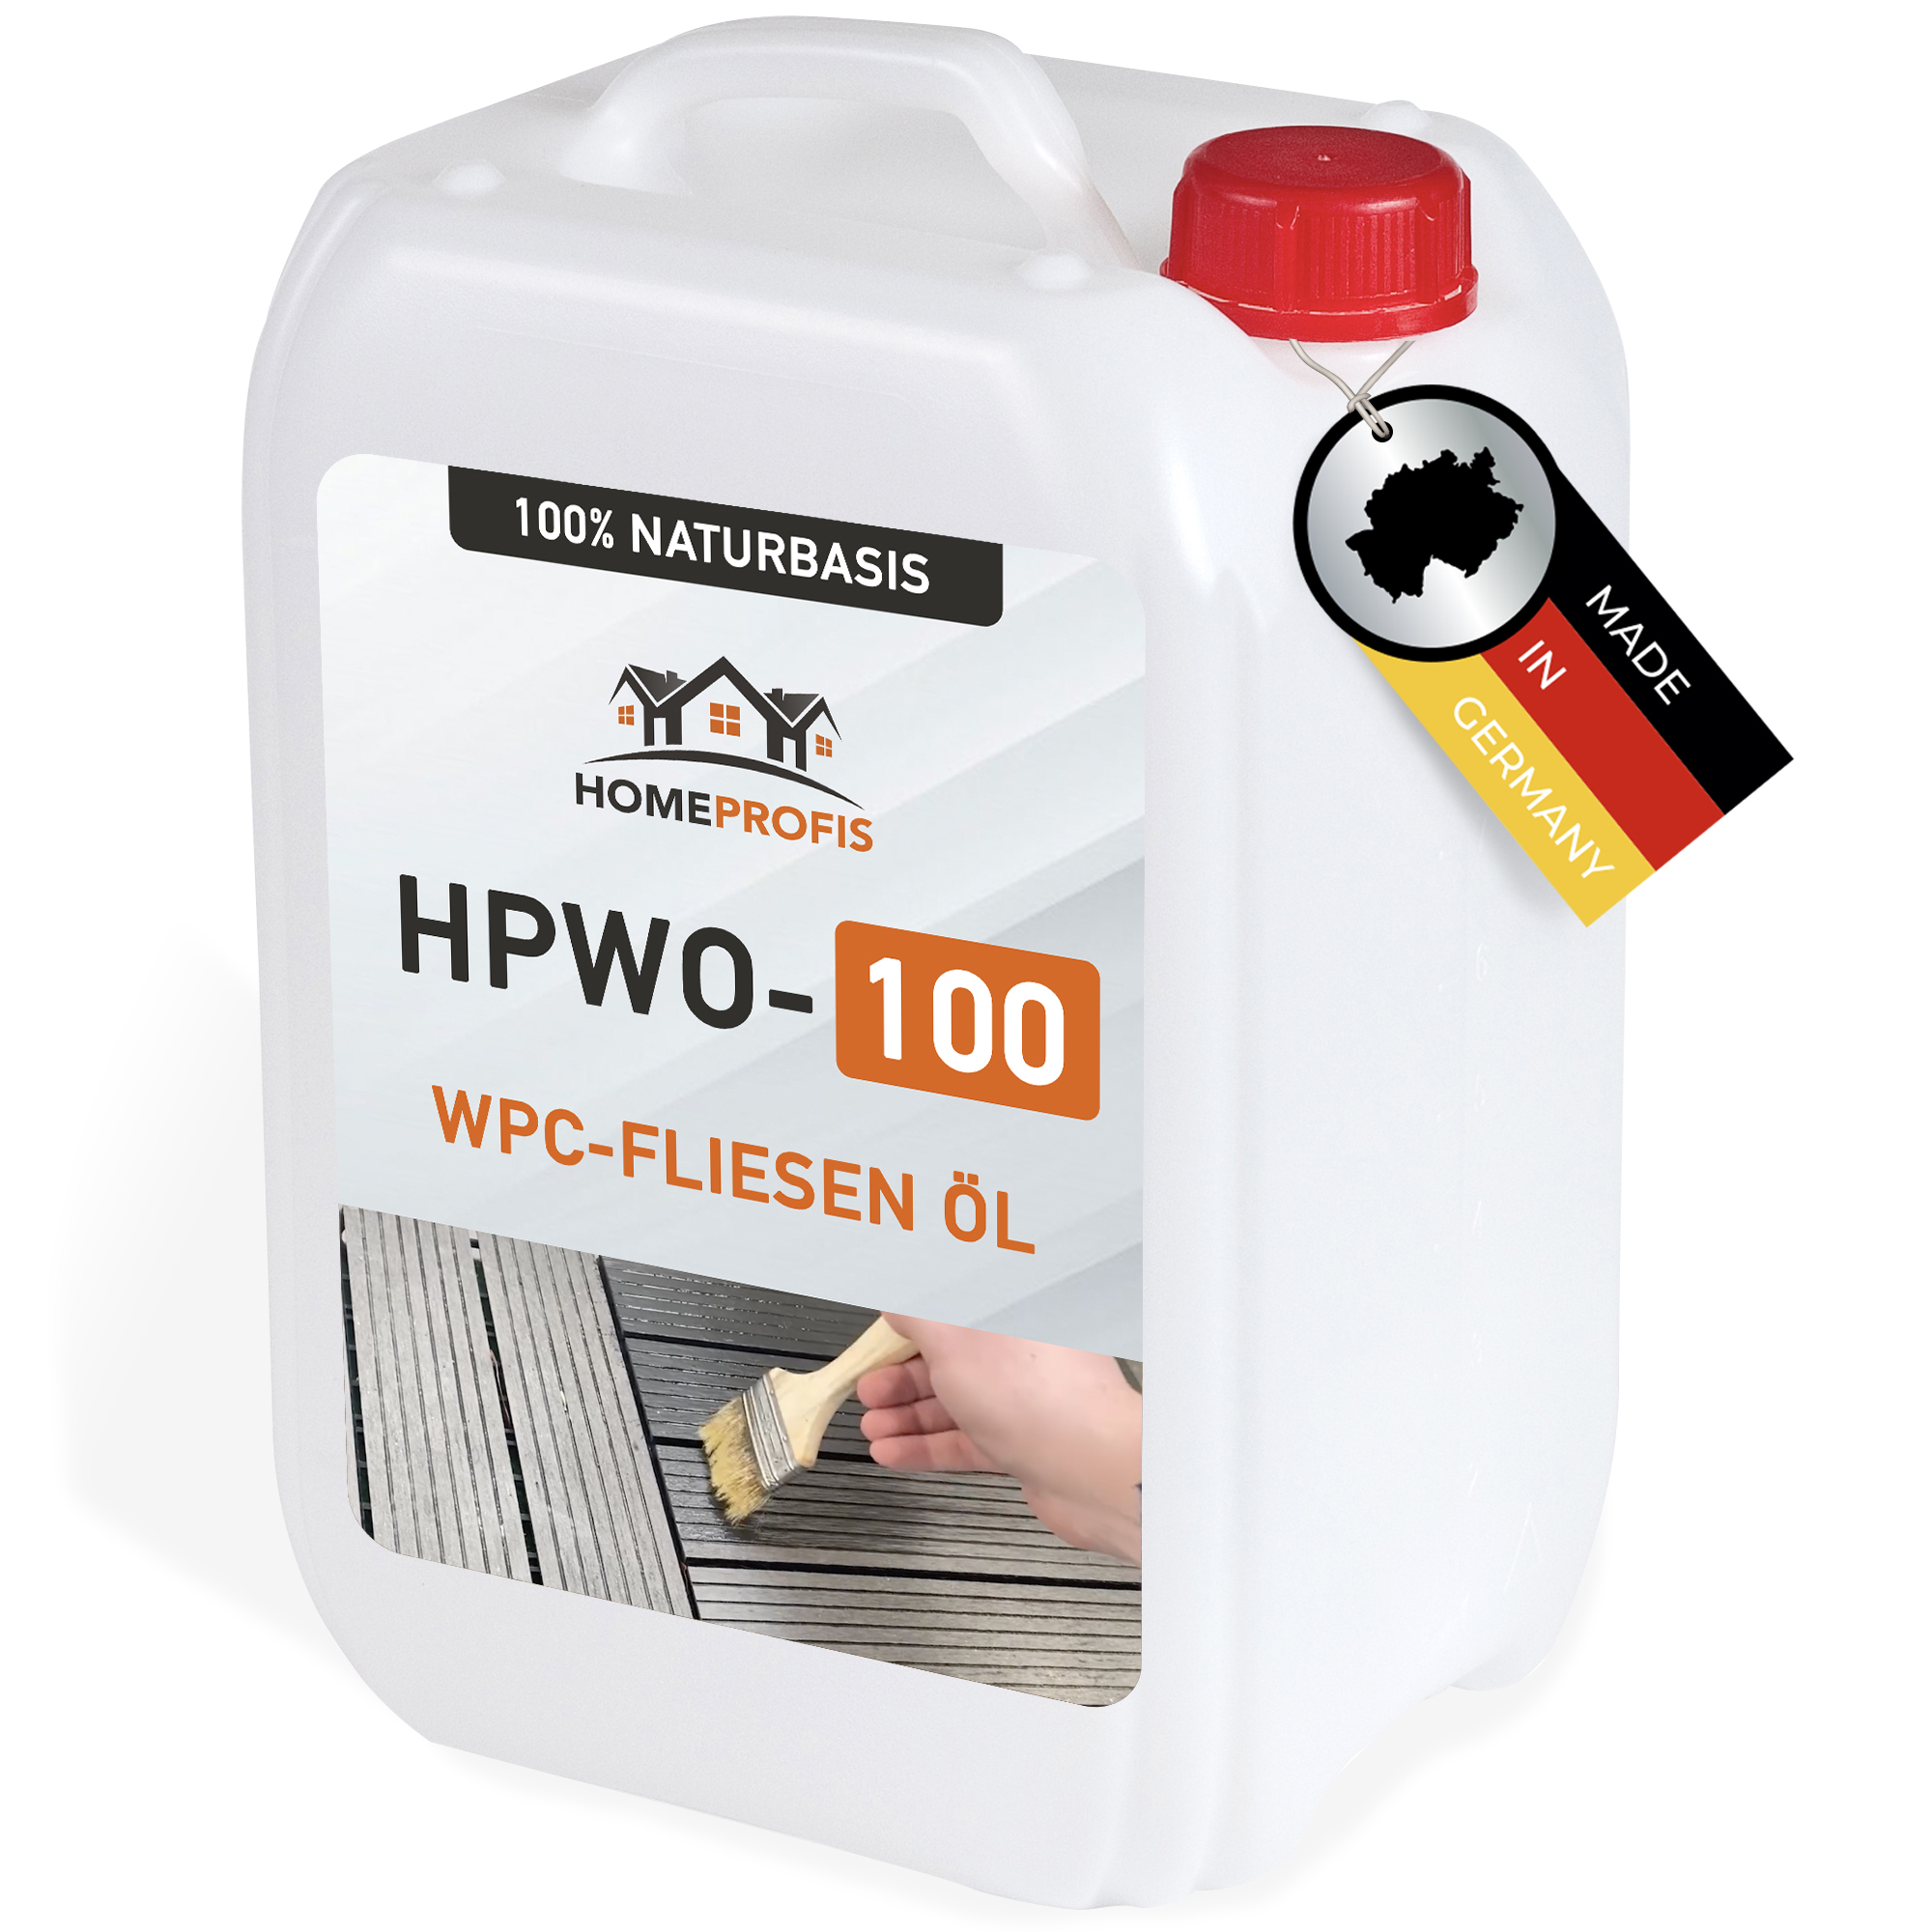 HPWO-100 WPC-Fliesen Öl (1 Liter)